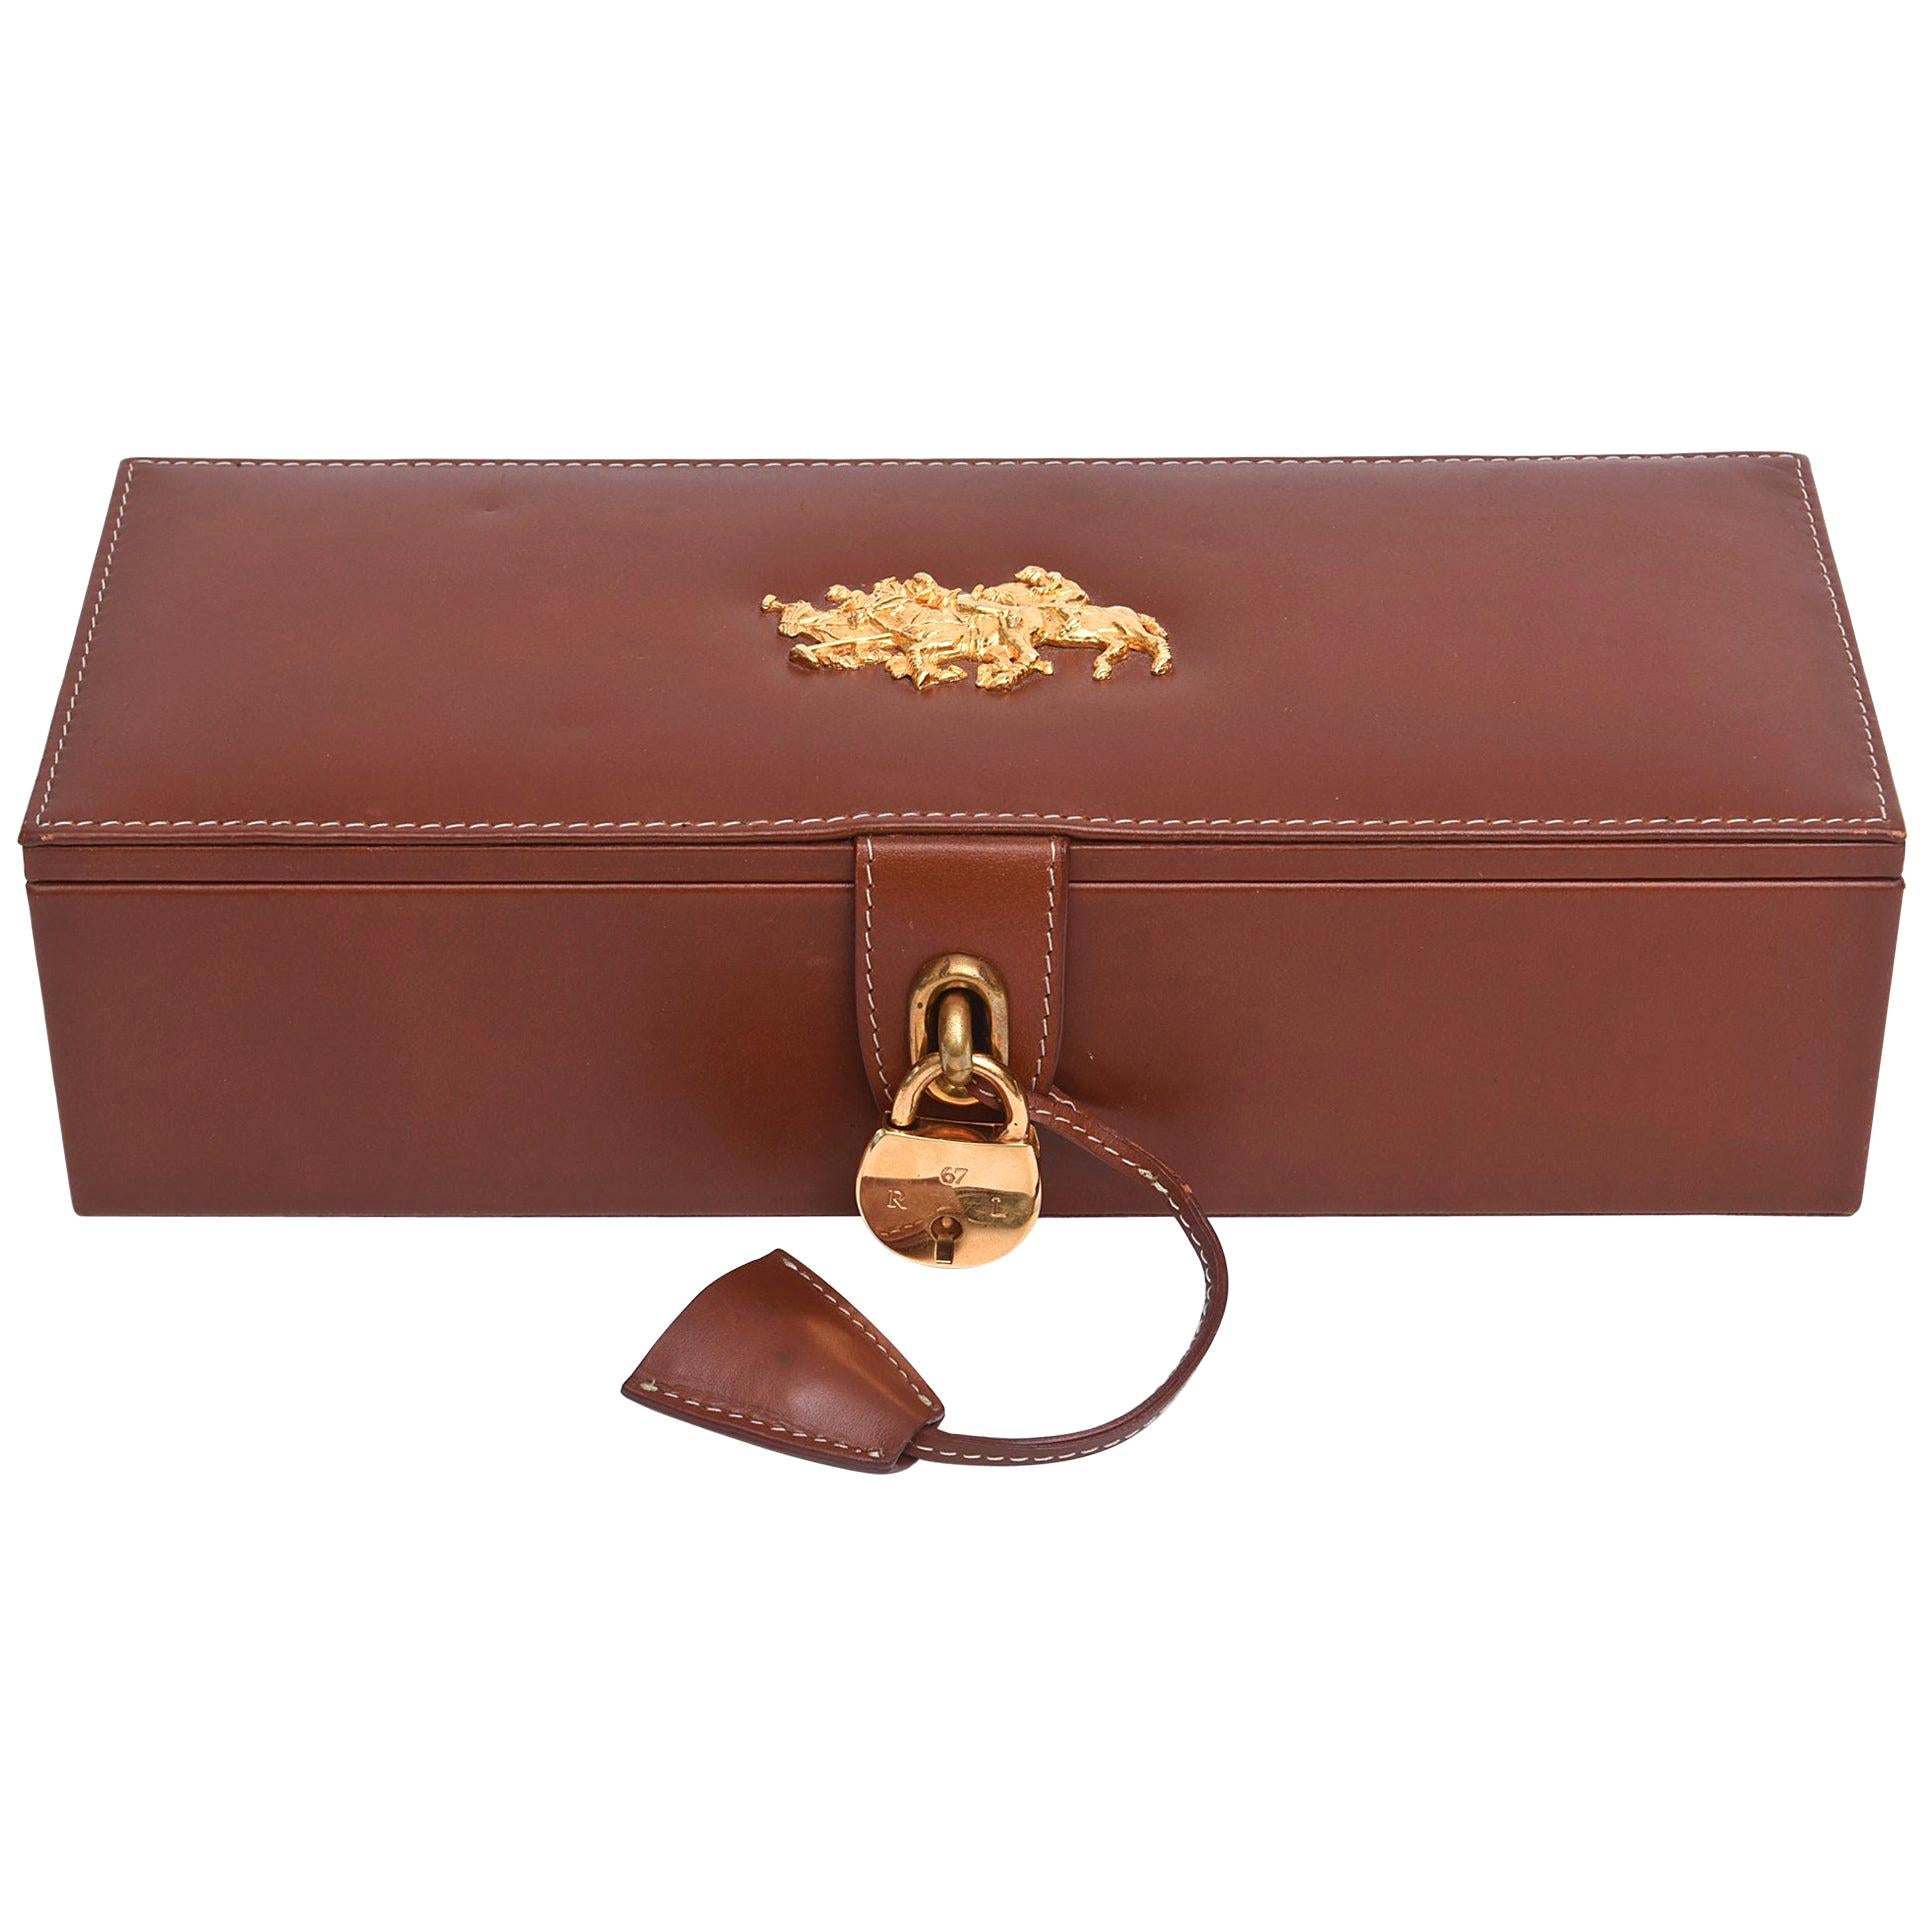 Ralph Lauren Box - 2 For Sale on 1stDibs